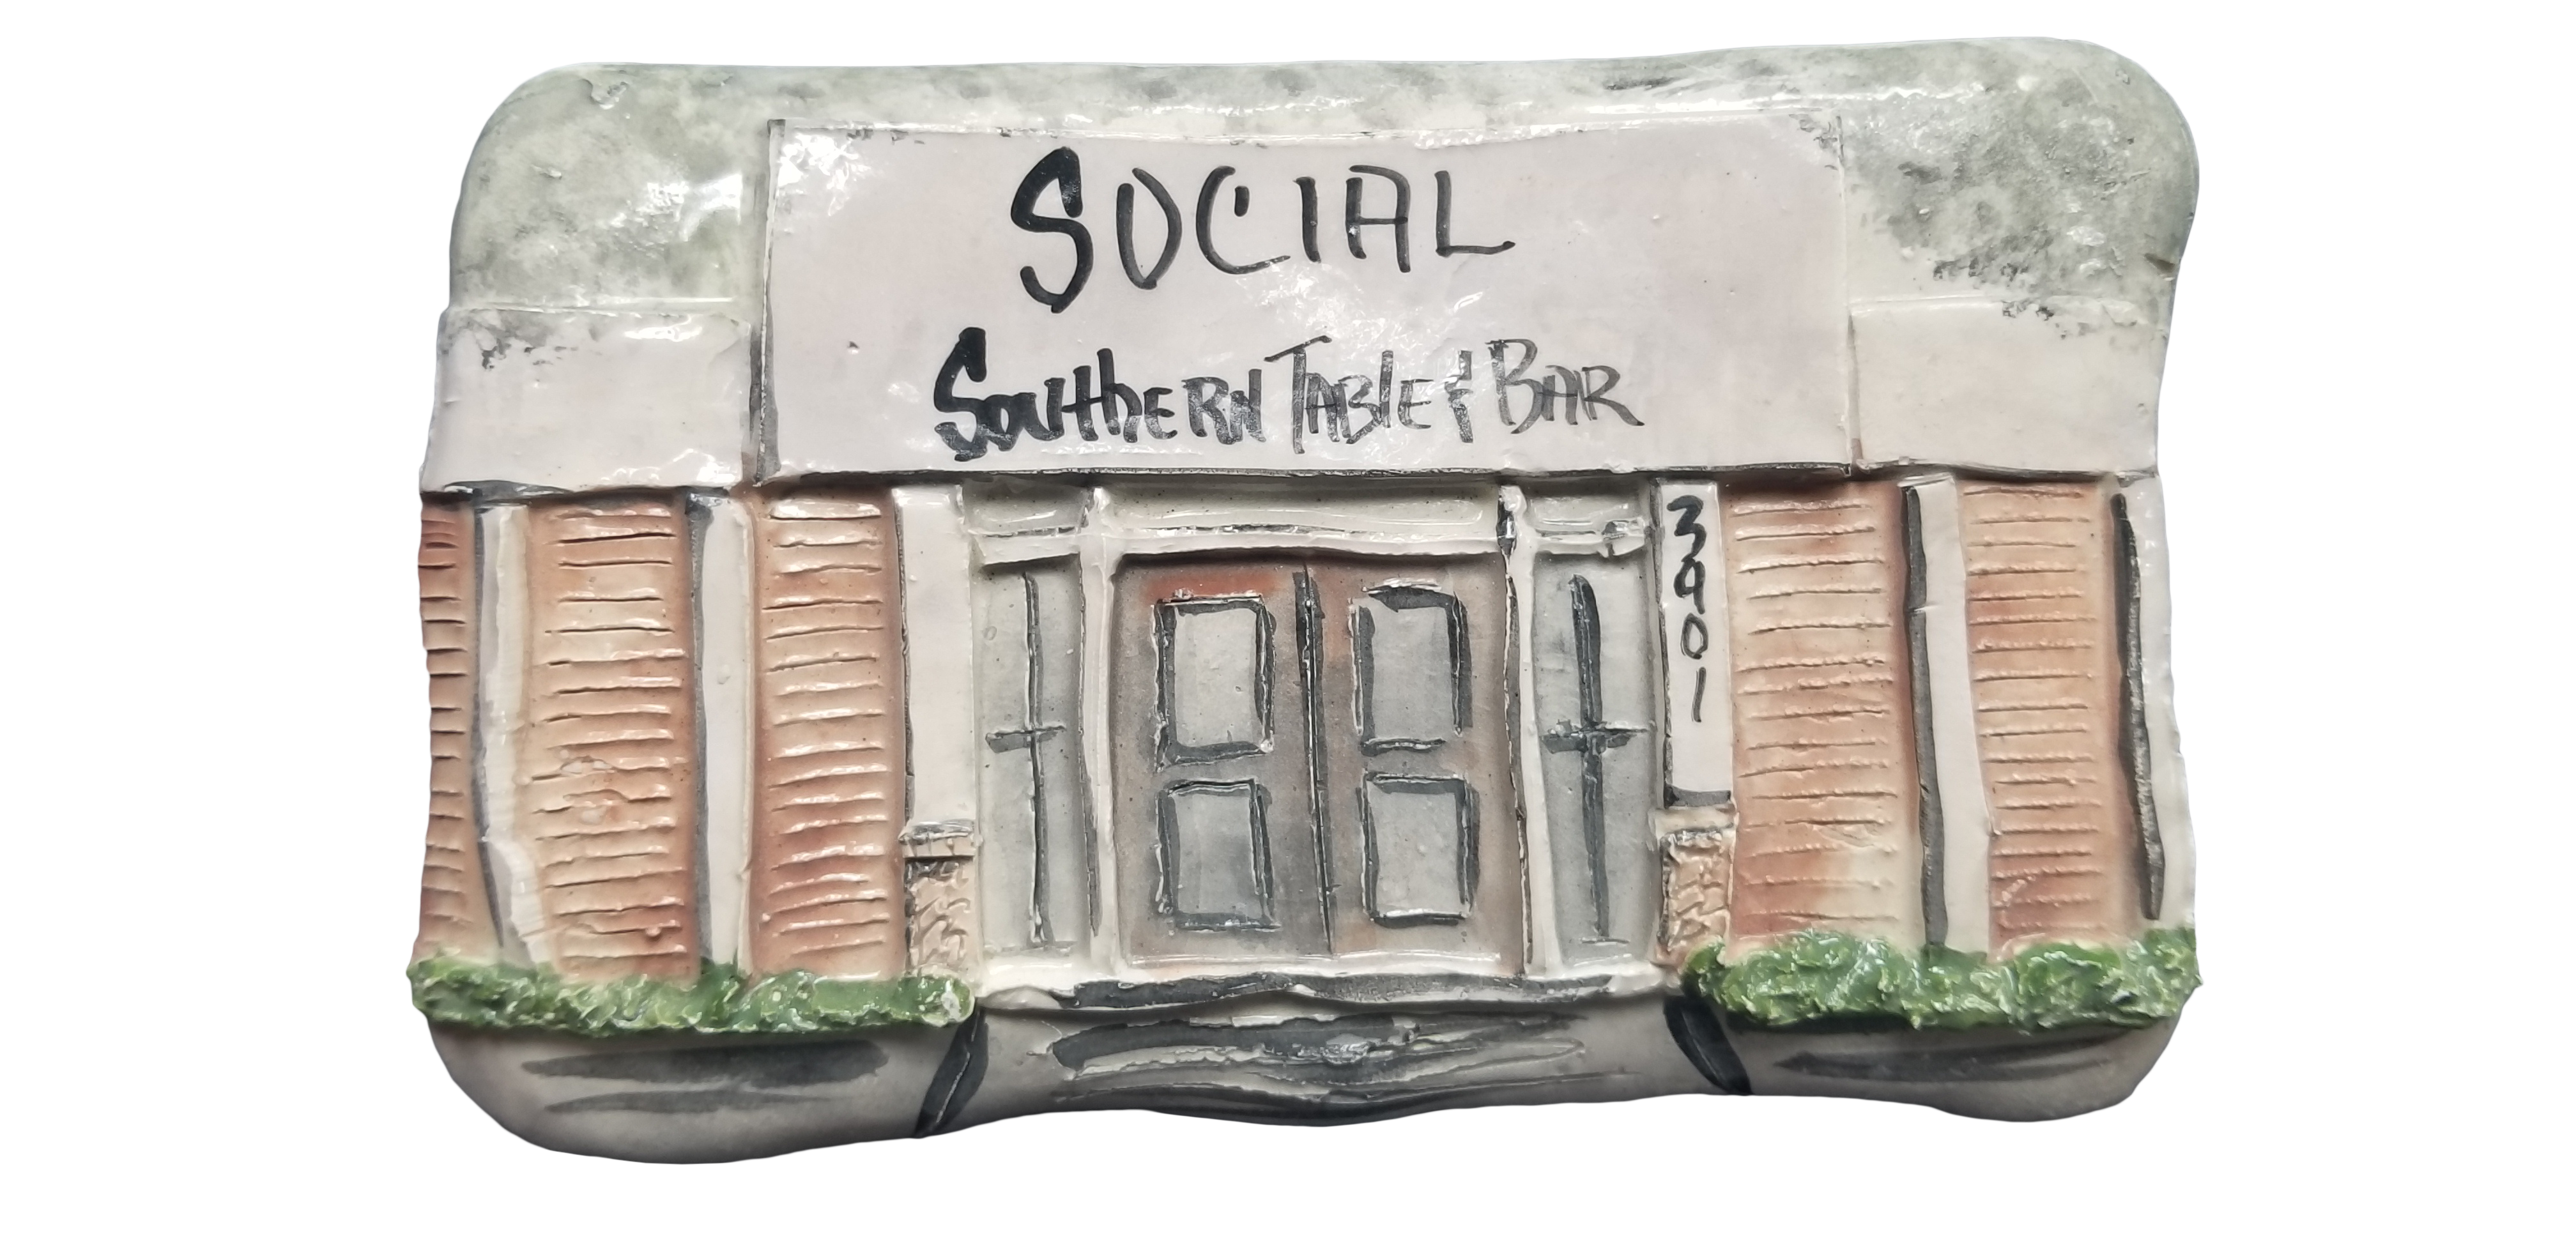 Social Southern Table & Bar